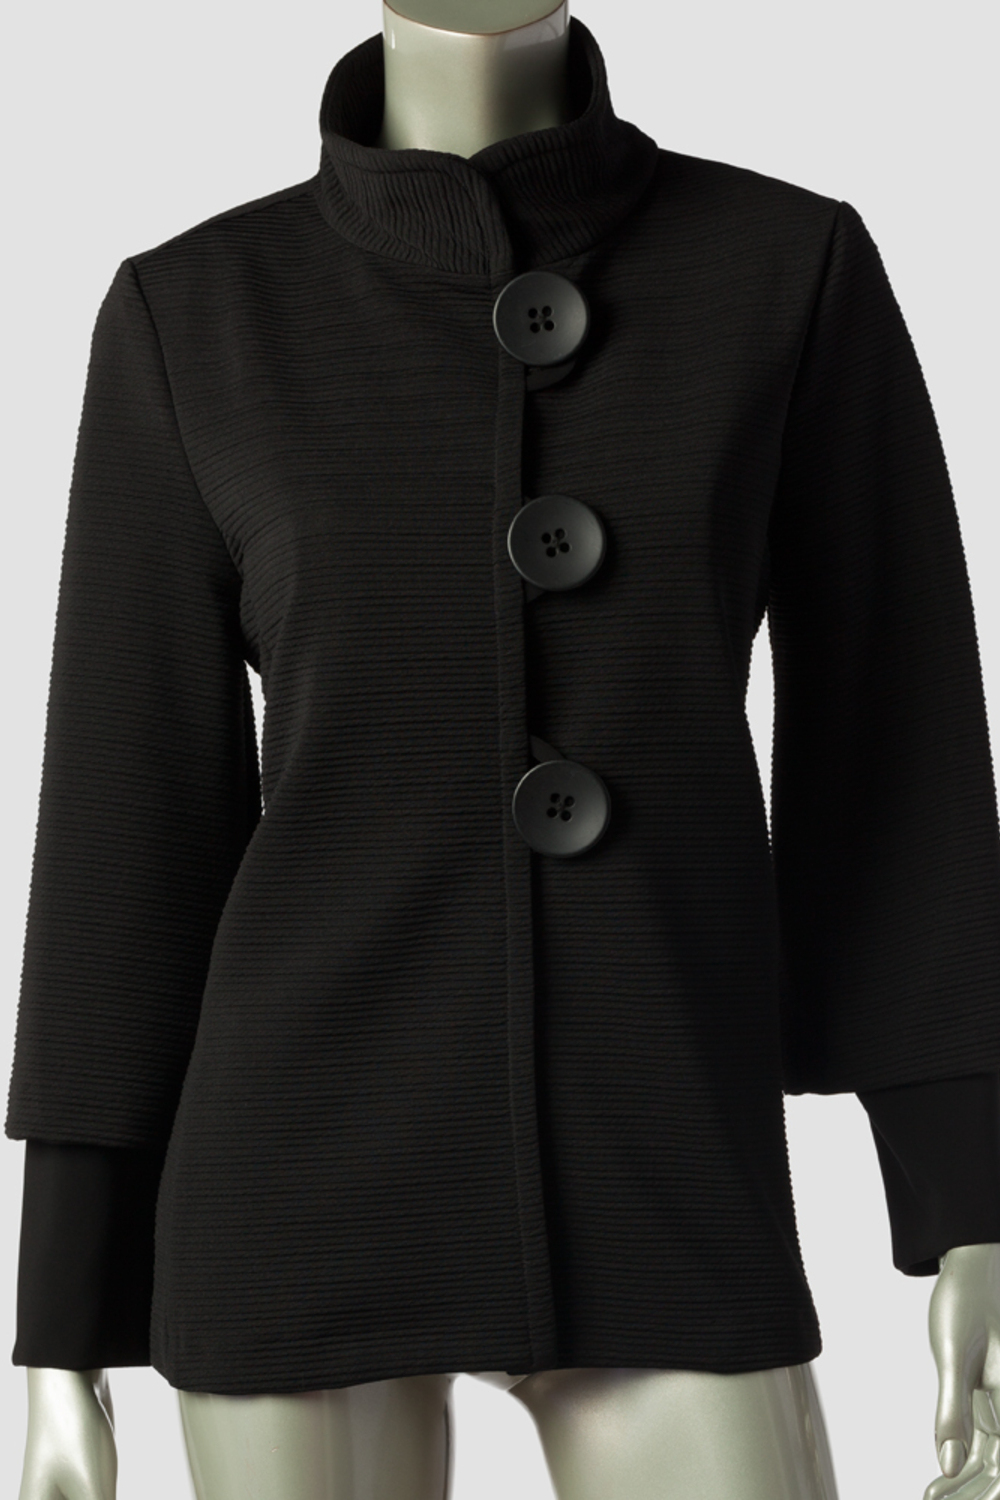 Joseph Ribkoff coat style 144517. Black/black